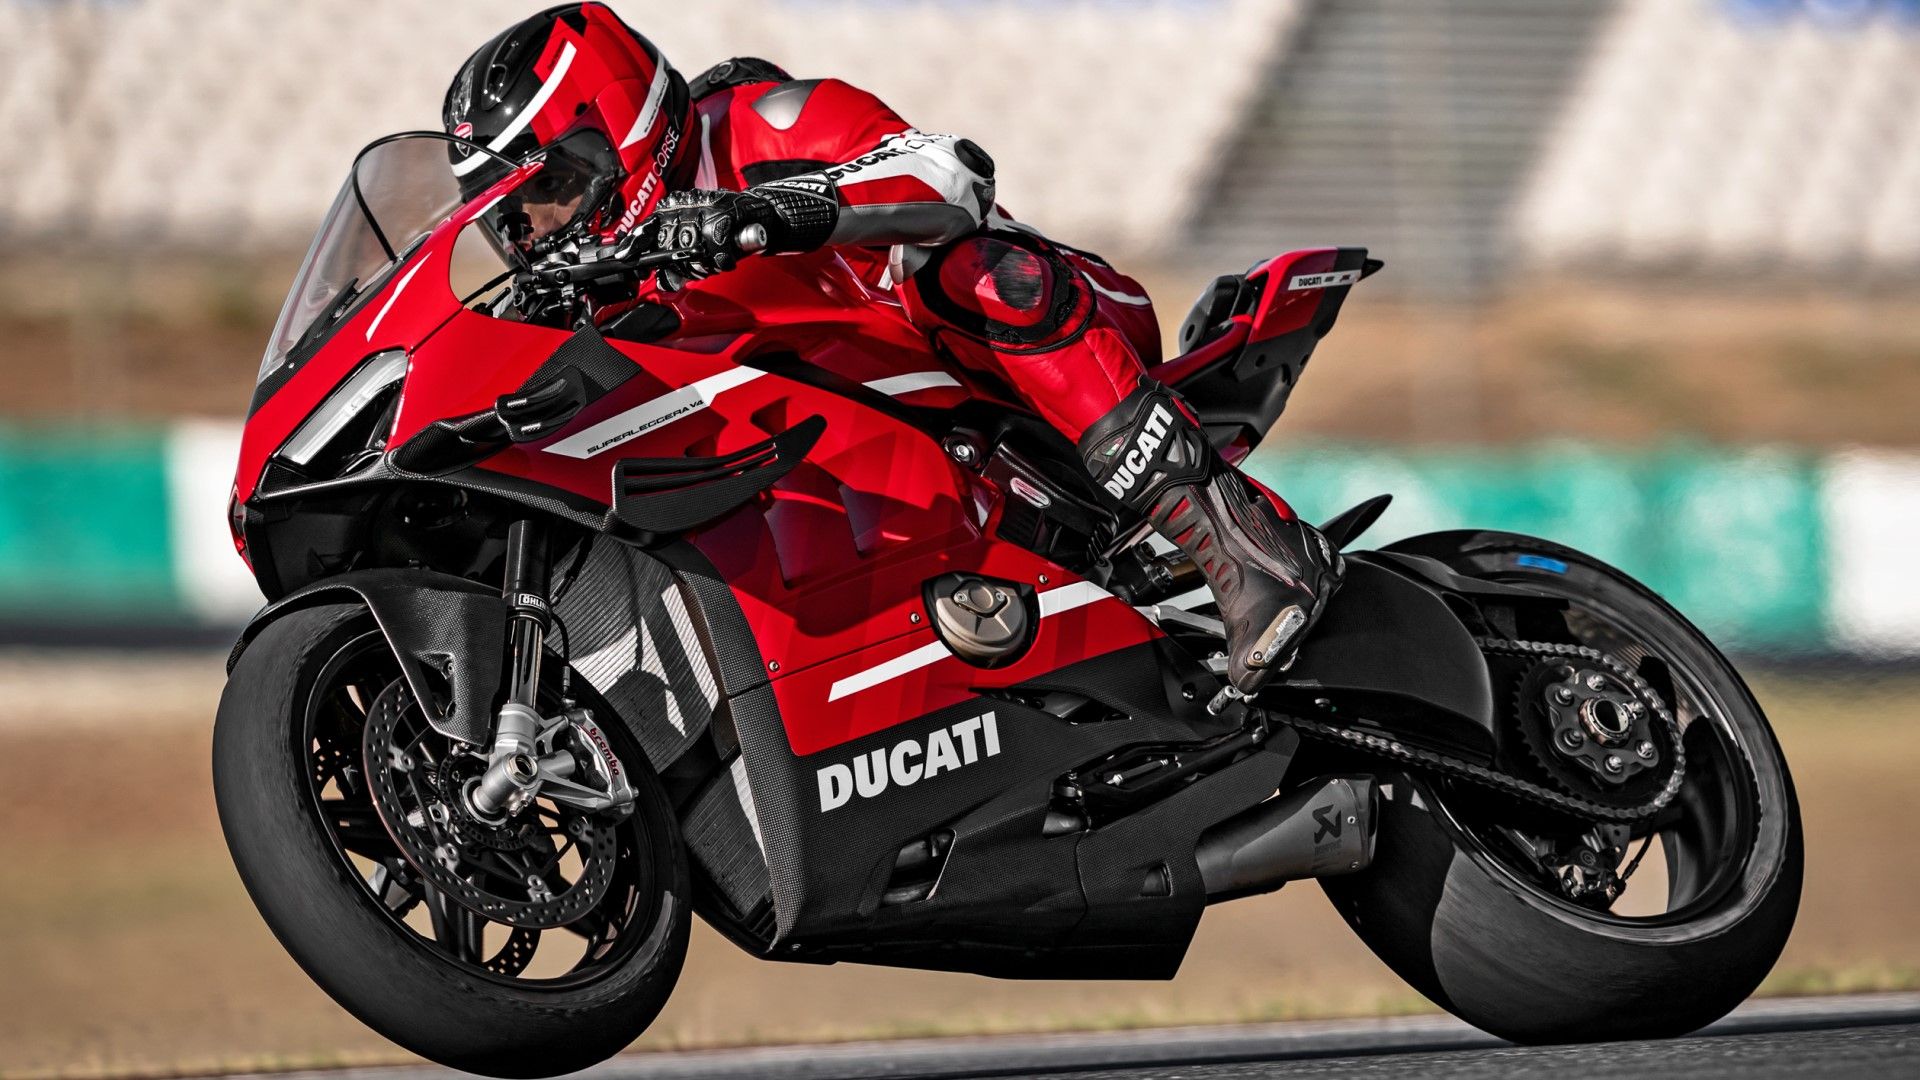 Ducati Superleggera V4 has the highest power to weight ratio